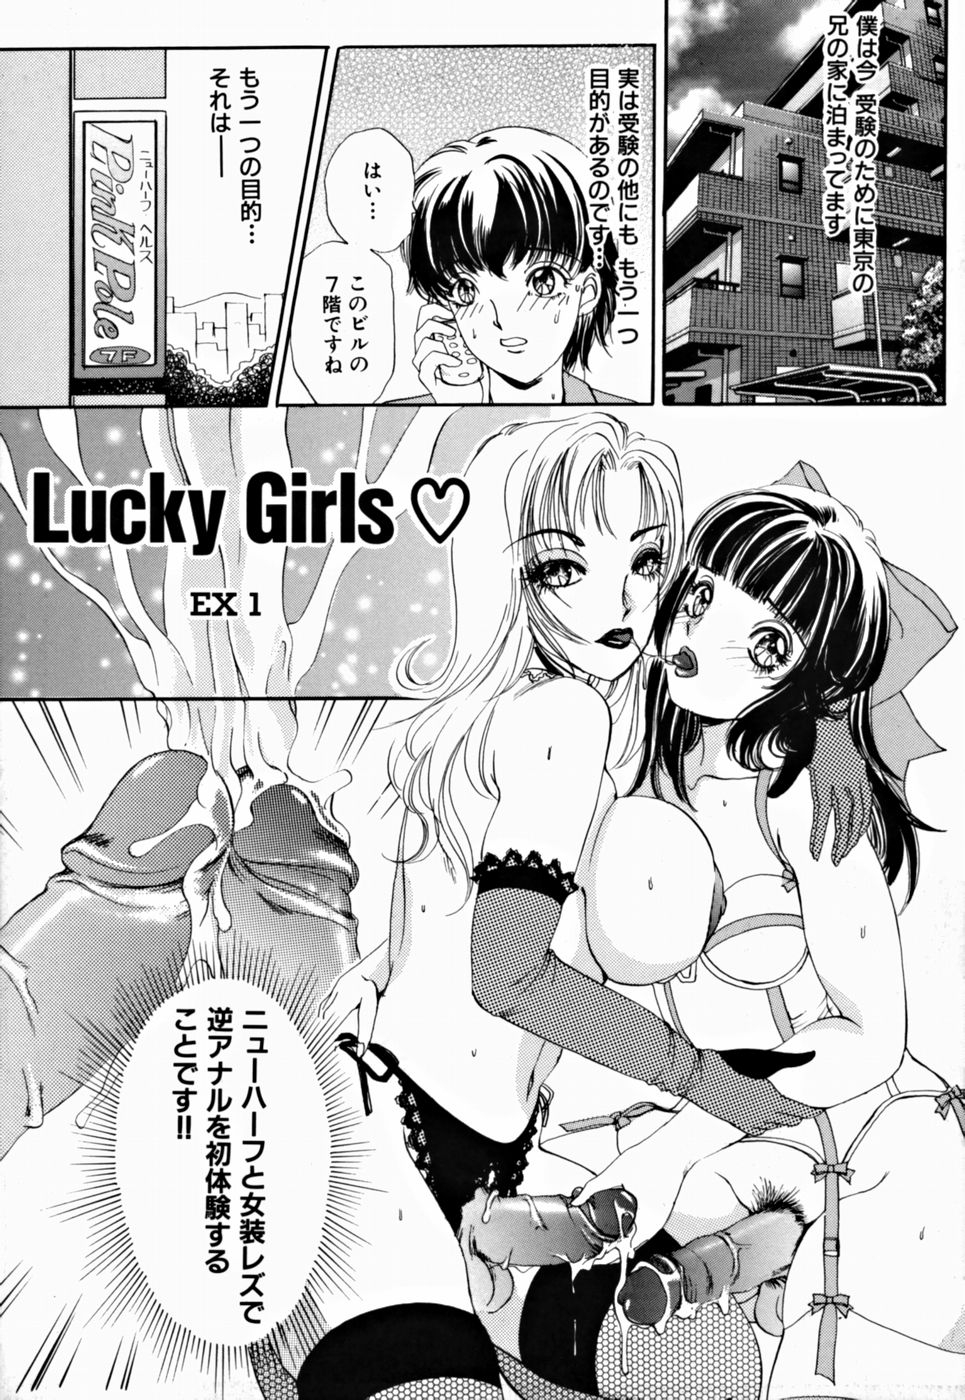 [The Amanoja9] T.S. I LOVE YOU... 2 - Lucky Girls Tsuiteru Onna 134